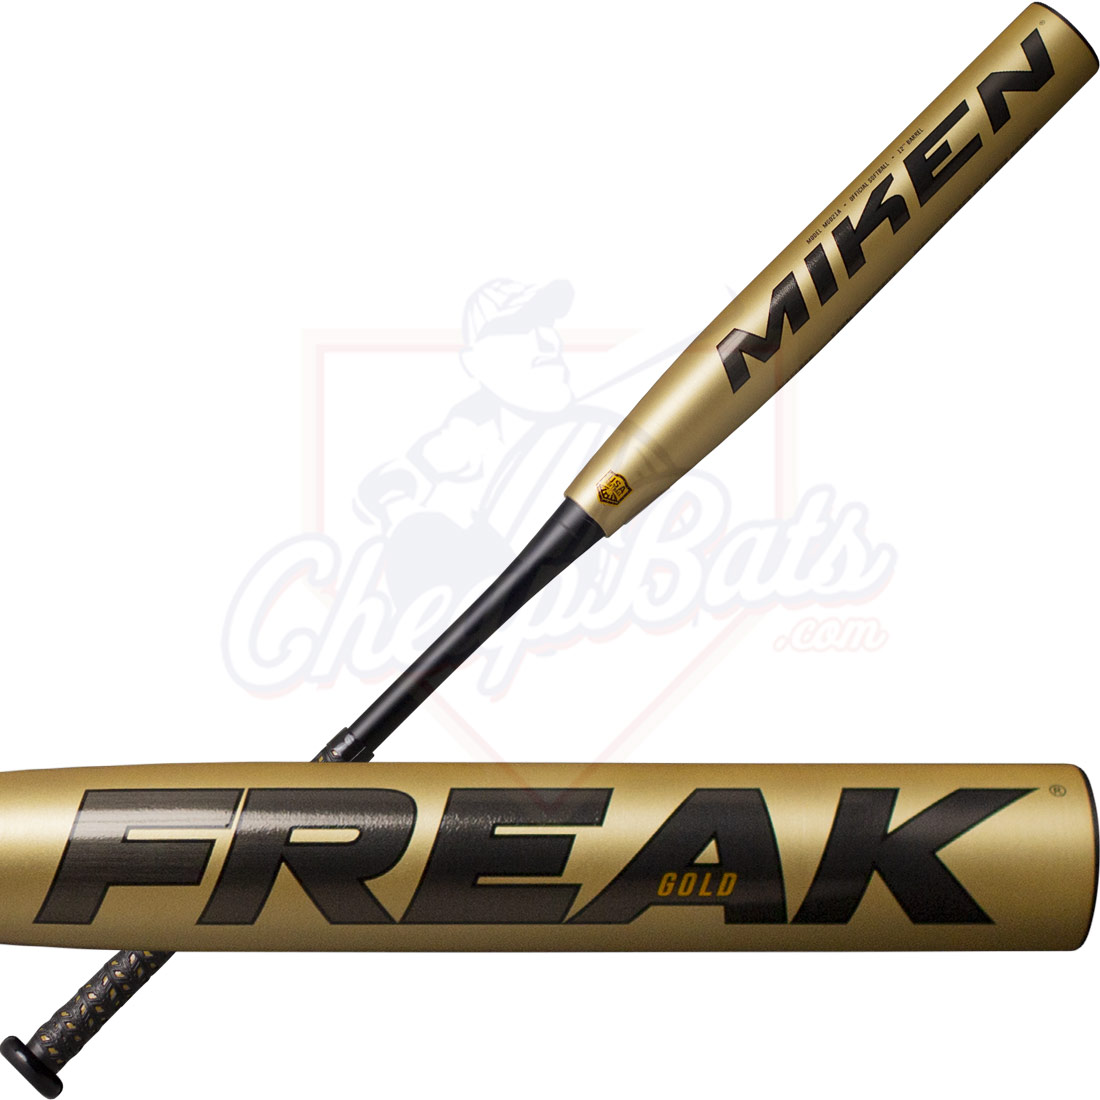 2022 Miken Freak Gold Slowpitch Softball Bat Maxload ASA USA MGD21A